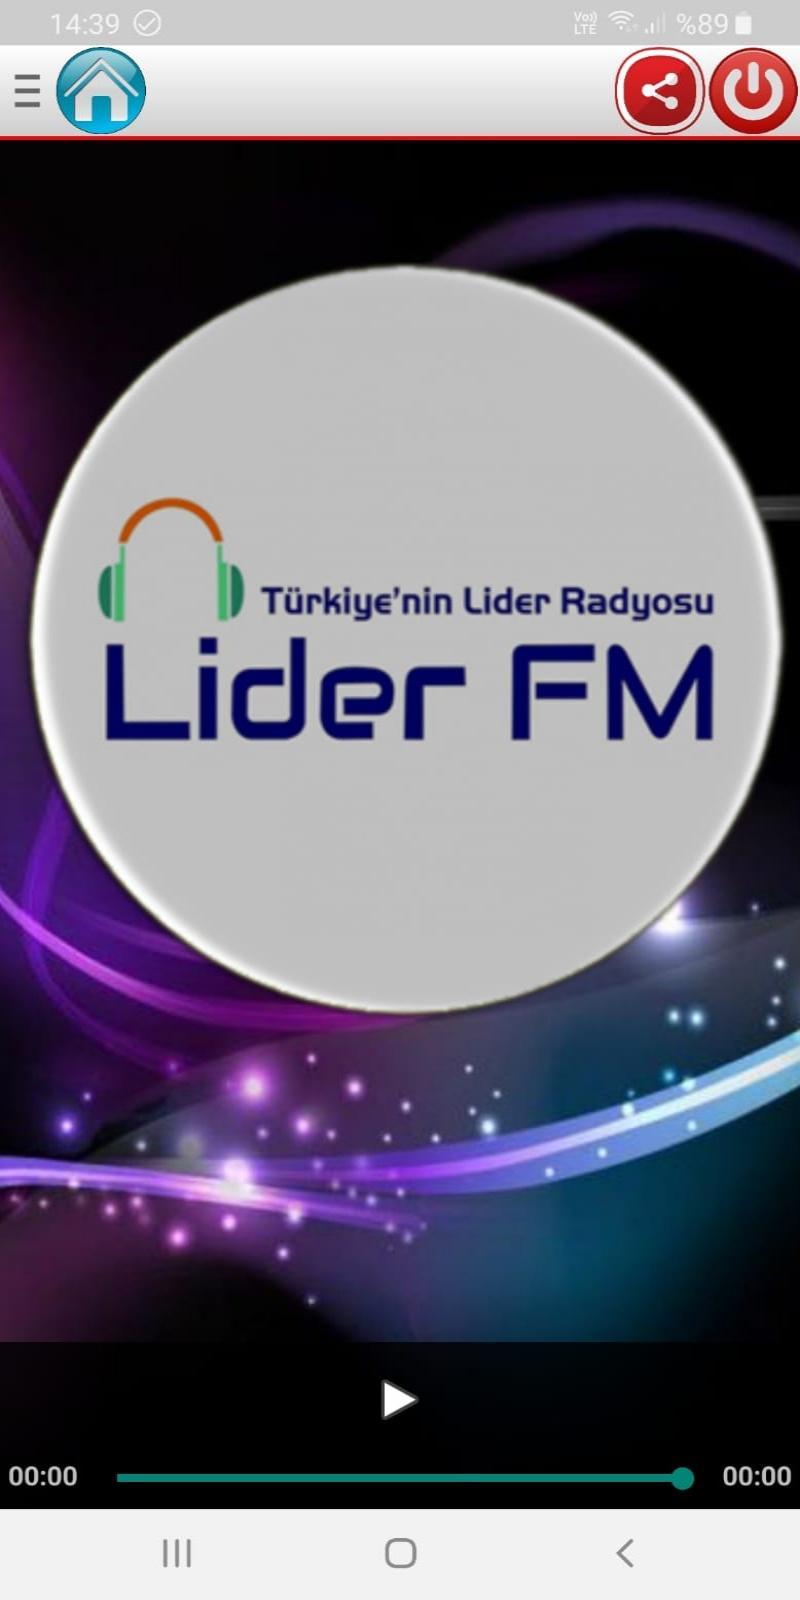 Lider FM izmir for Android - APK Download